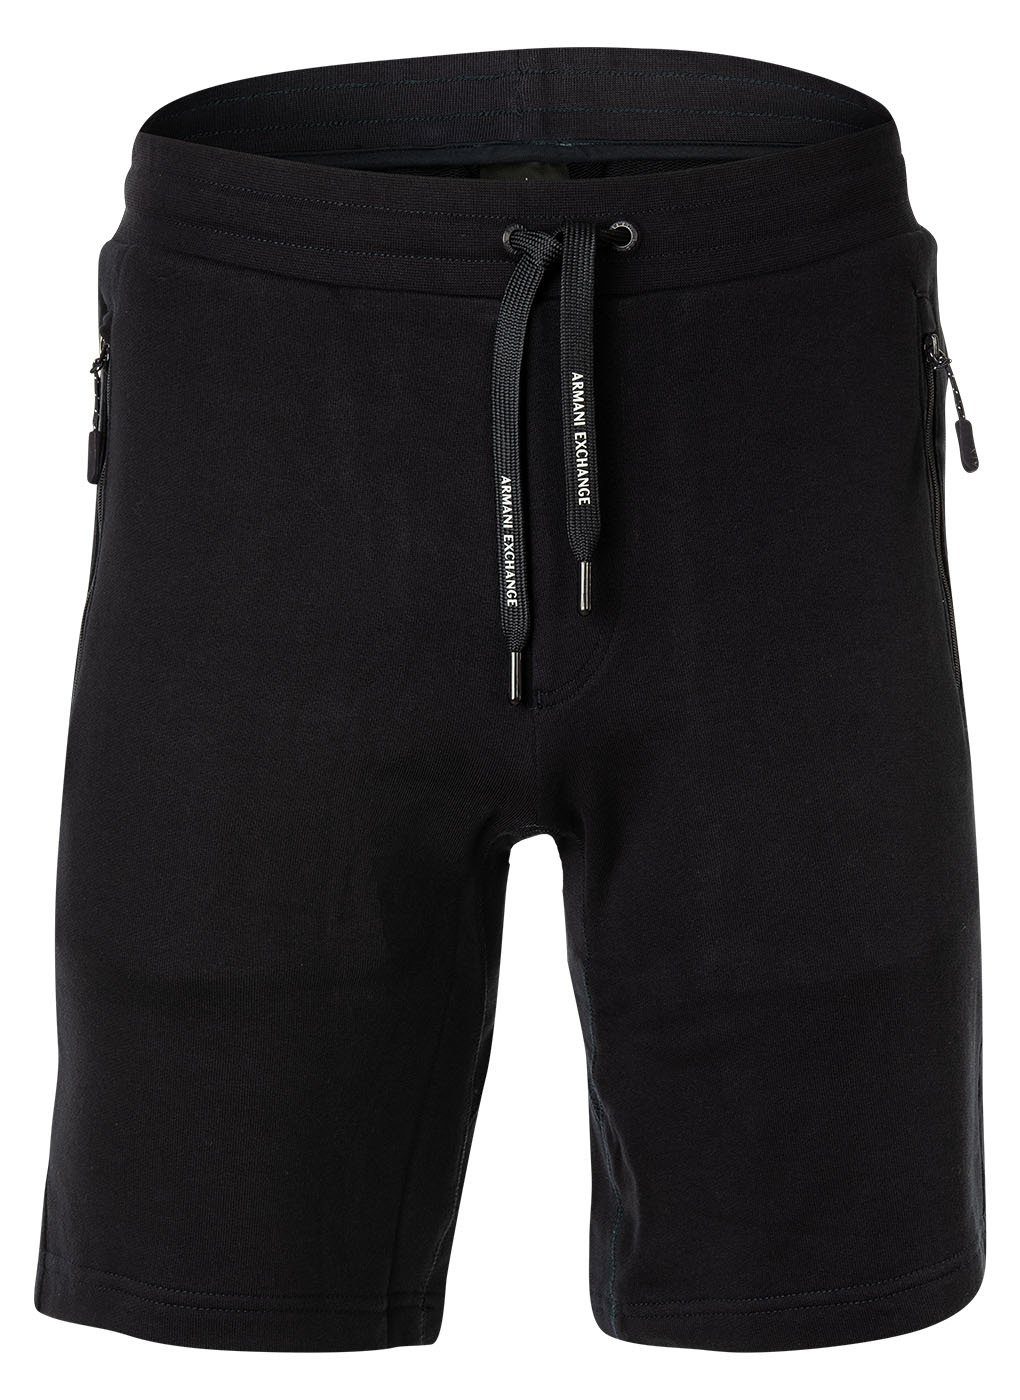 Jogginghose Sweatshorts ARMANI EXCHANGE Loungewear Marine Pants, - Herren kurz